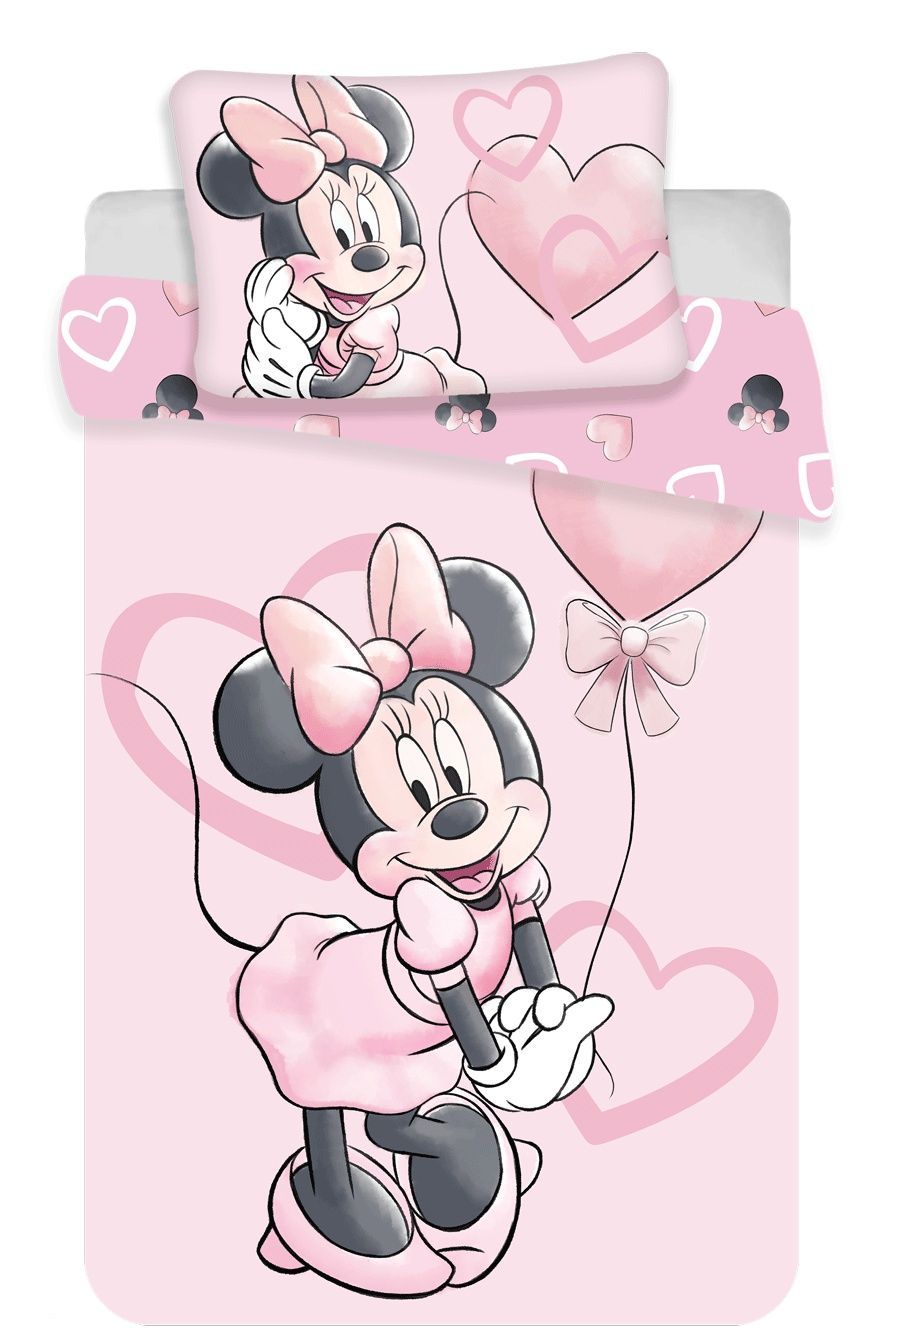 Disney obliečky do postieľky Minnie "Pink heart 02" baby Jerry Fabrics